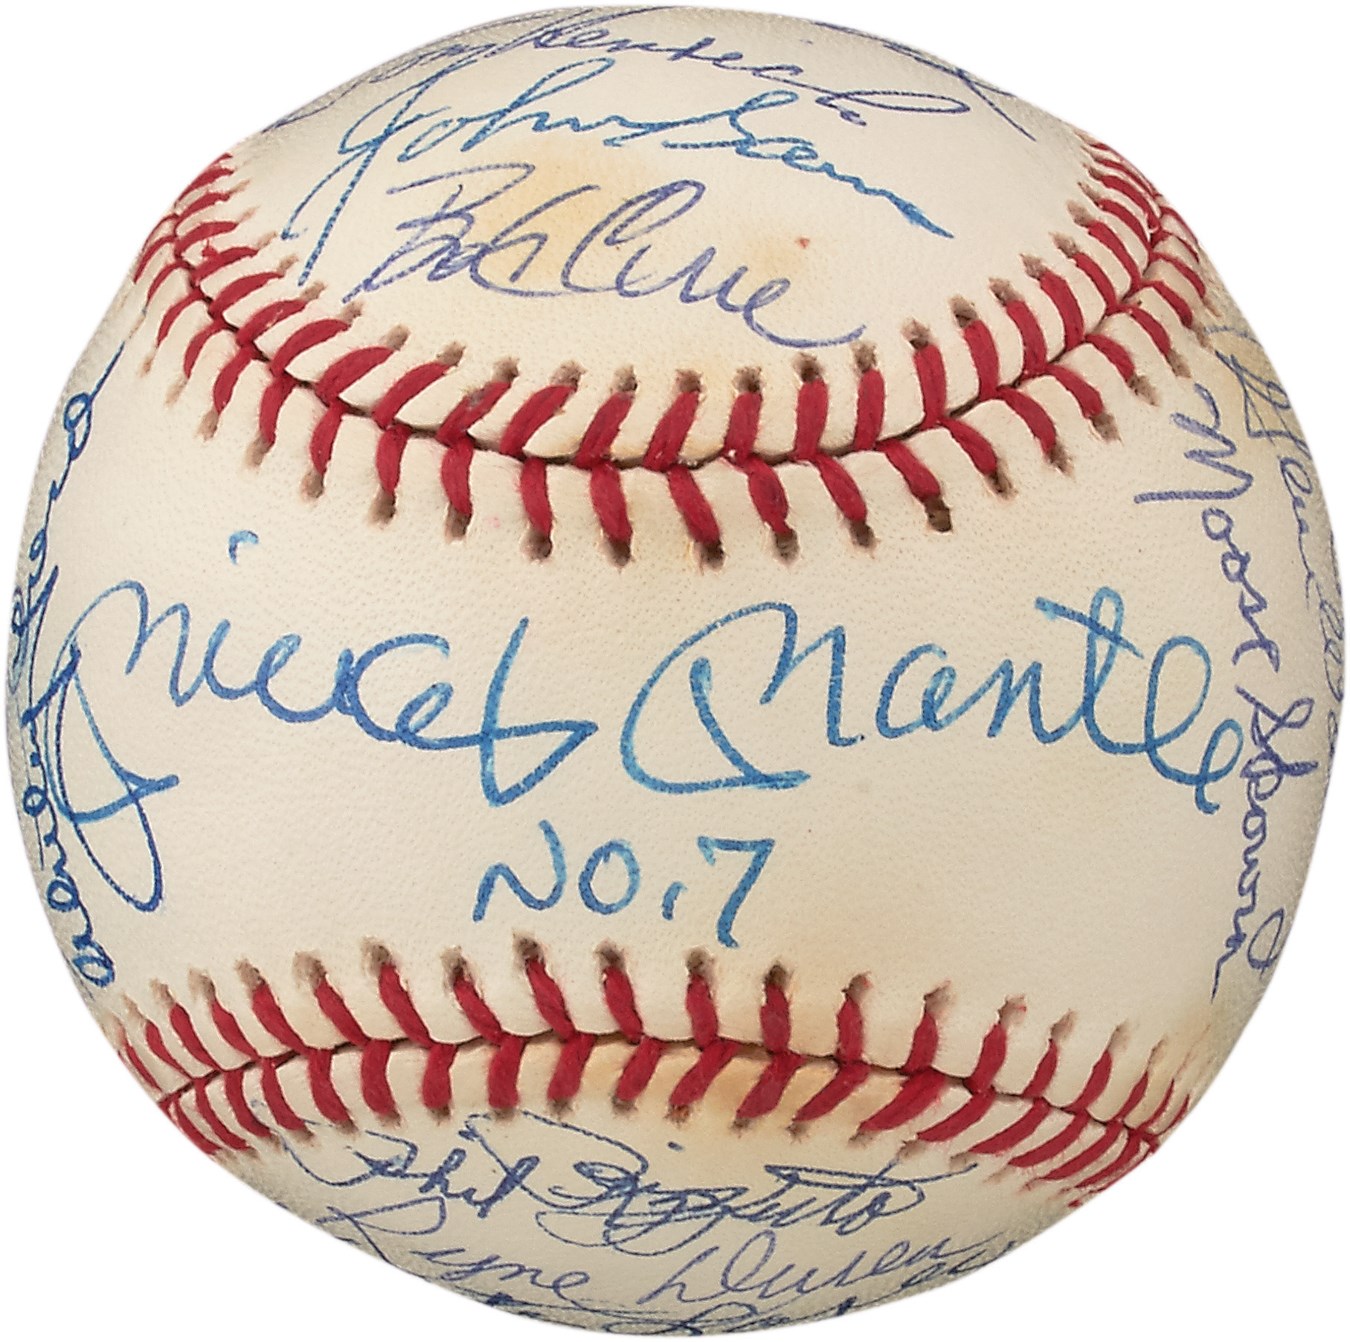 - 1950s New York Yankee World Series Champions Signed Baseball - Mickey Mantle No. 7 on Sweet Spot